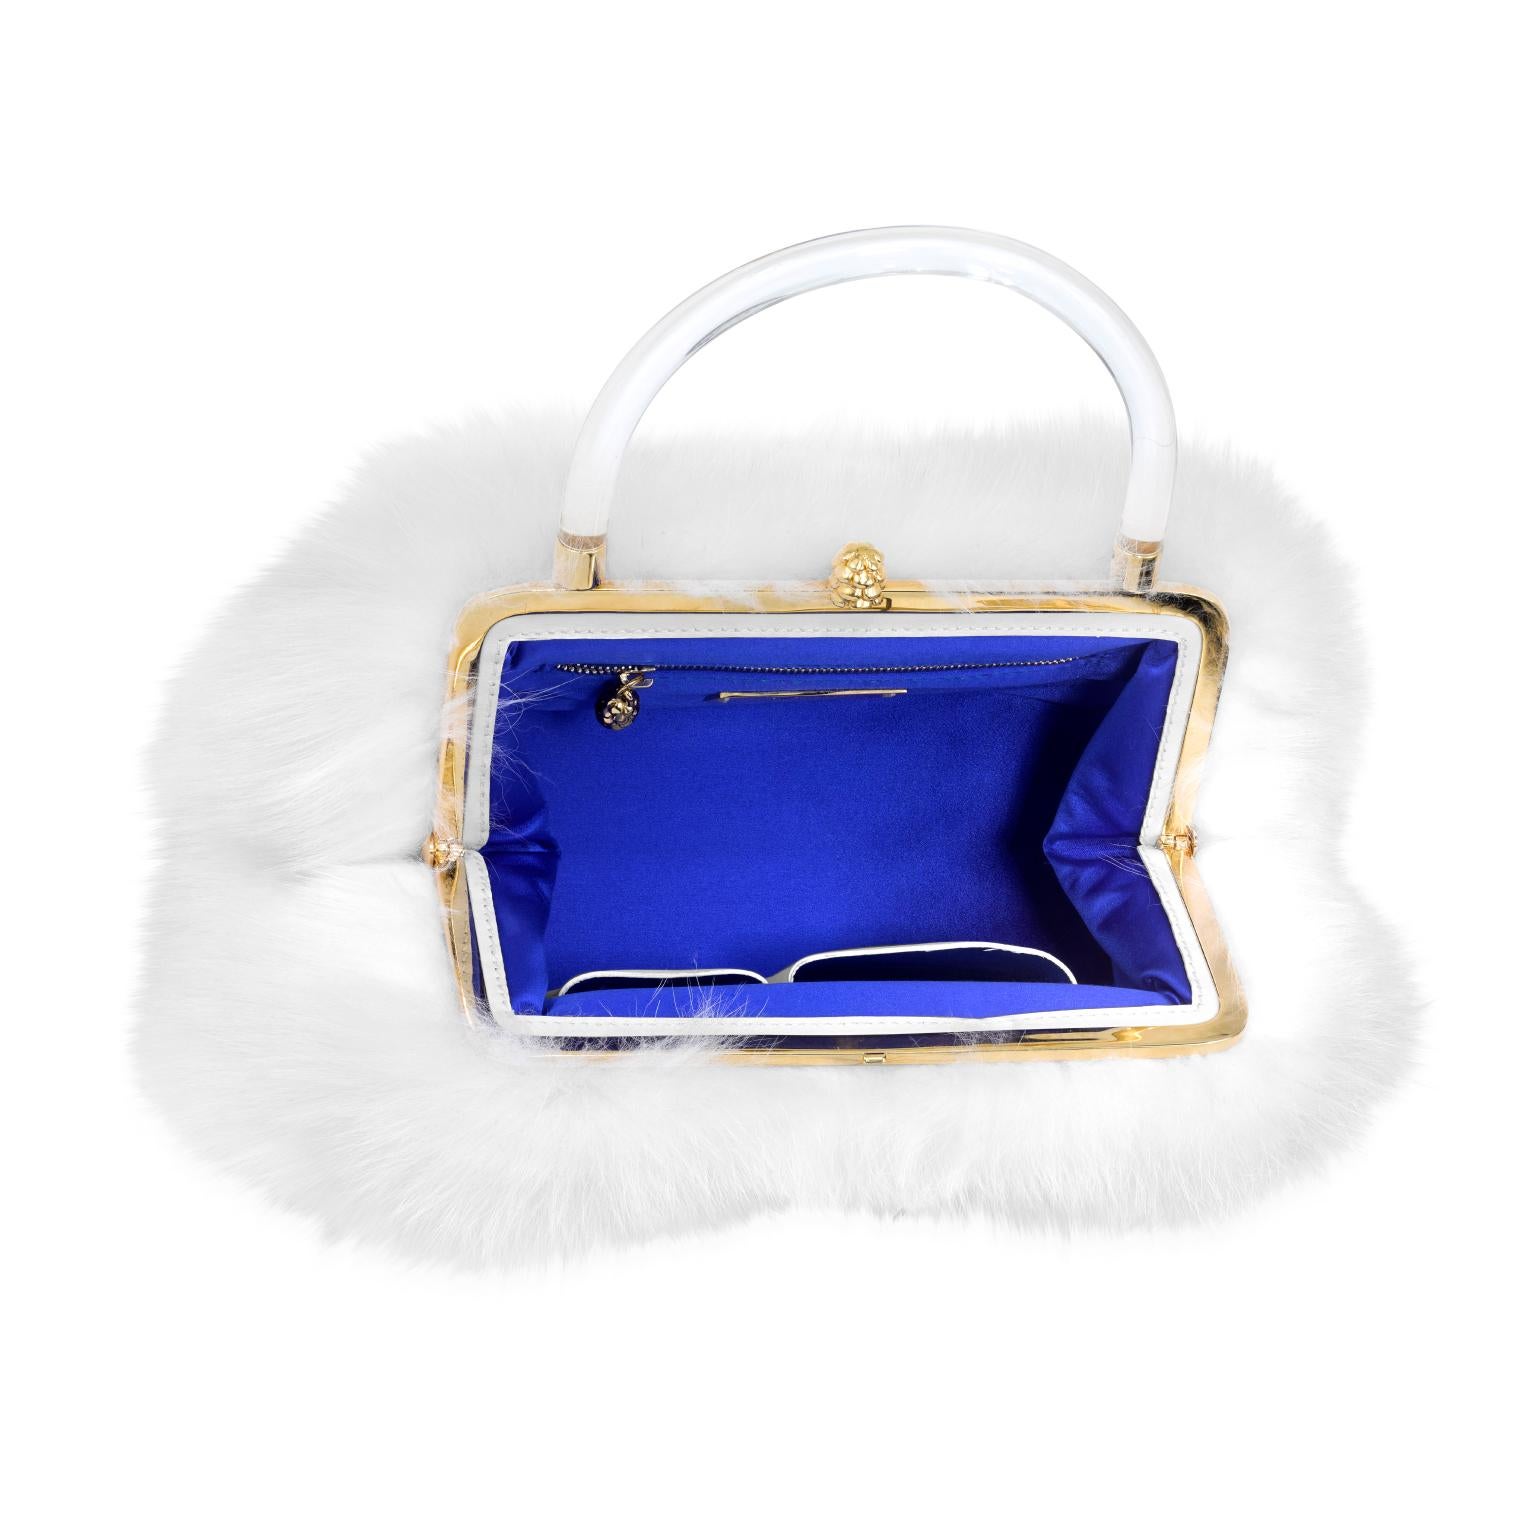 white fluffy purse